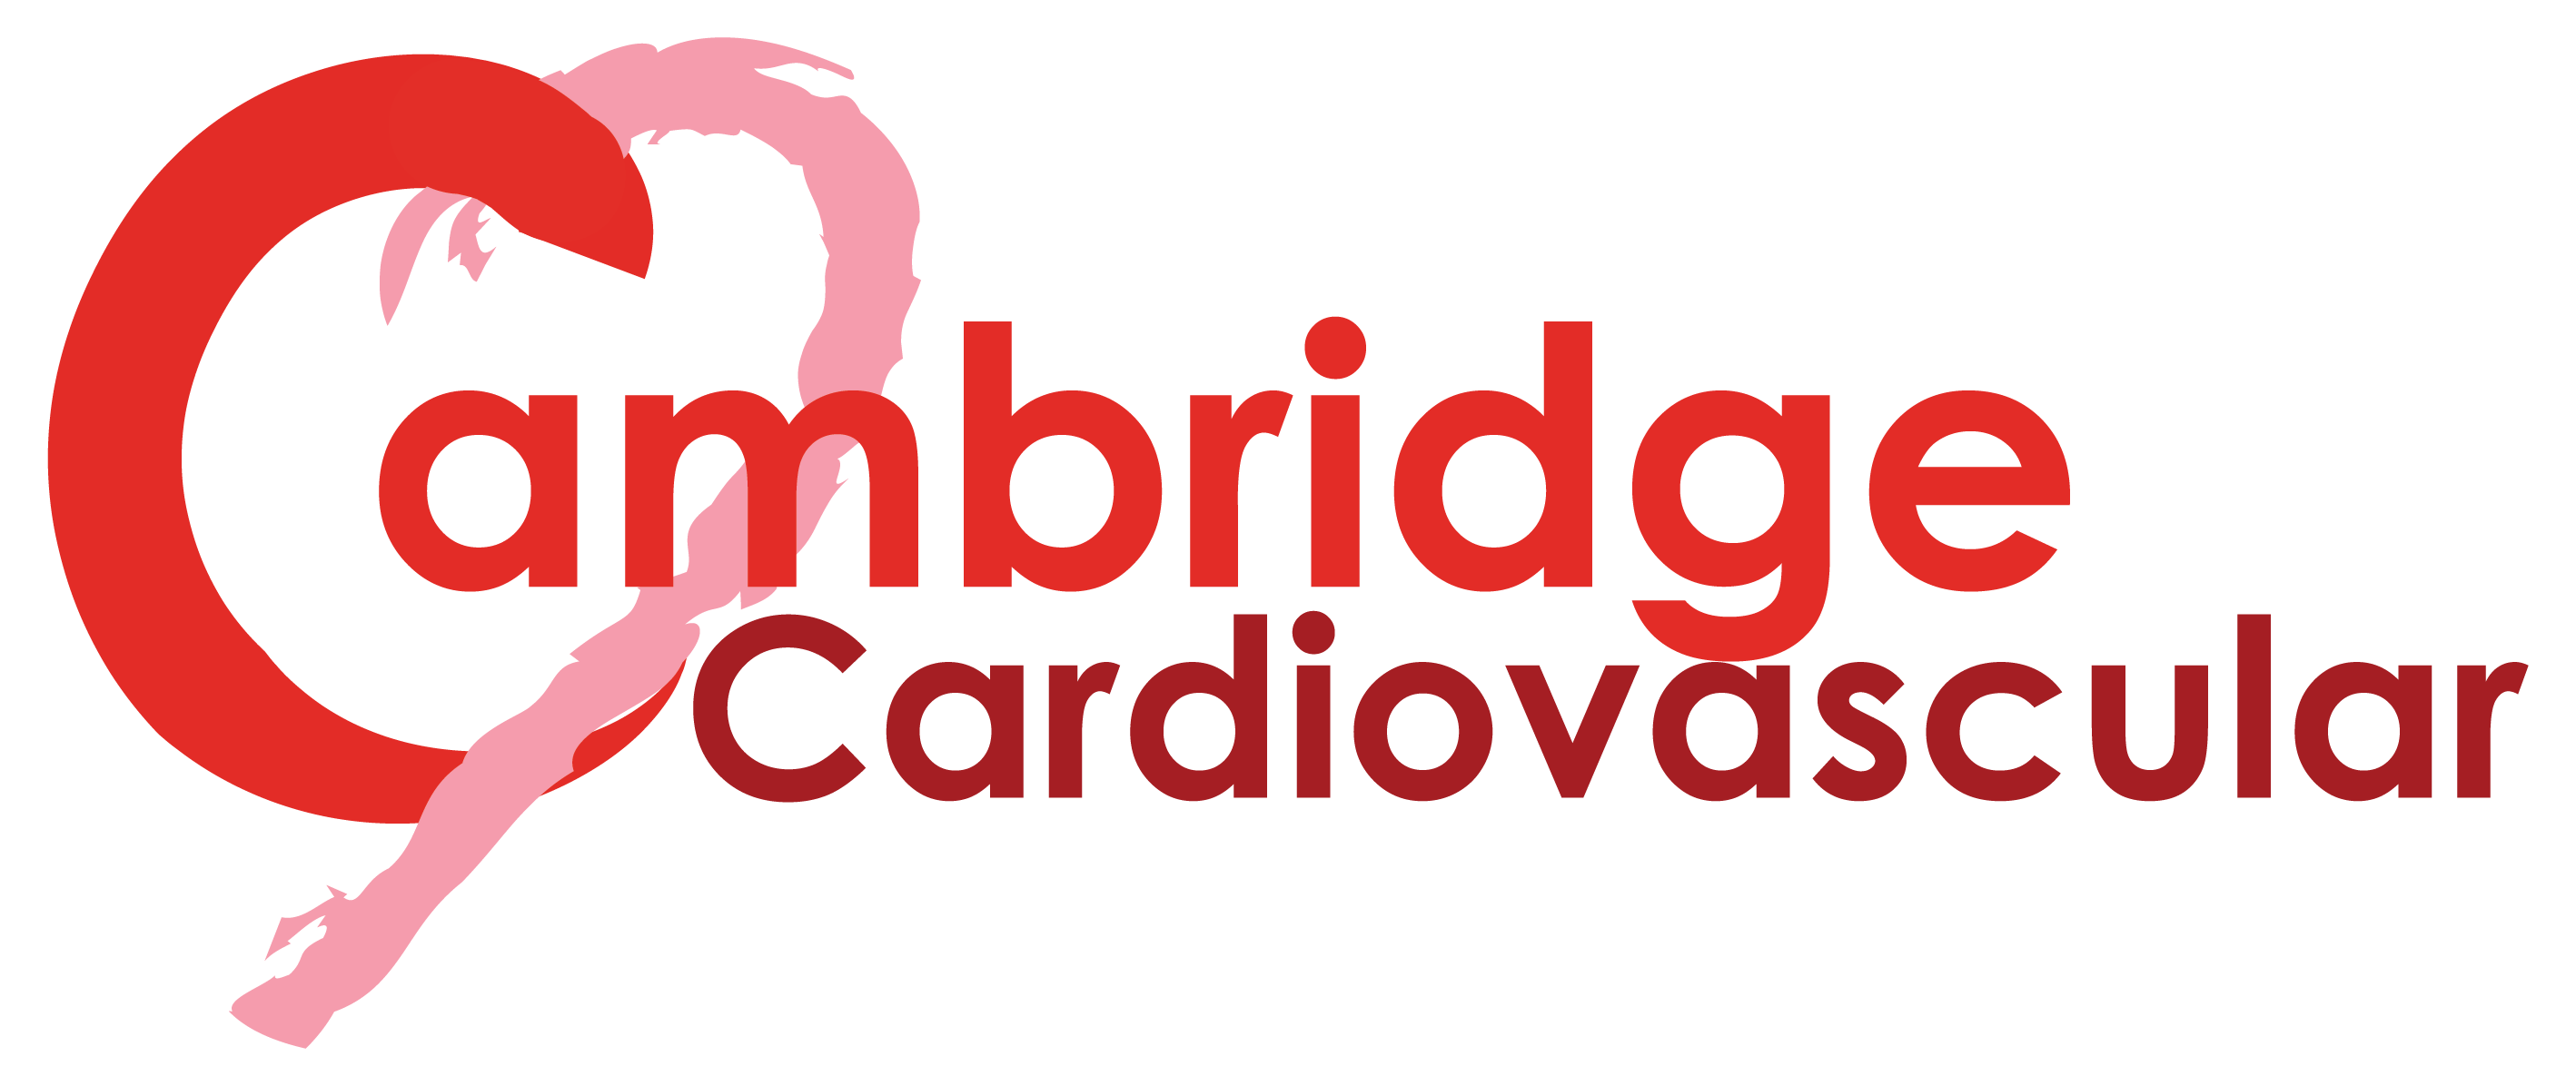 Cambridge Cardiovascular logo - transparent